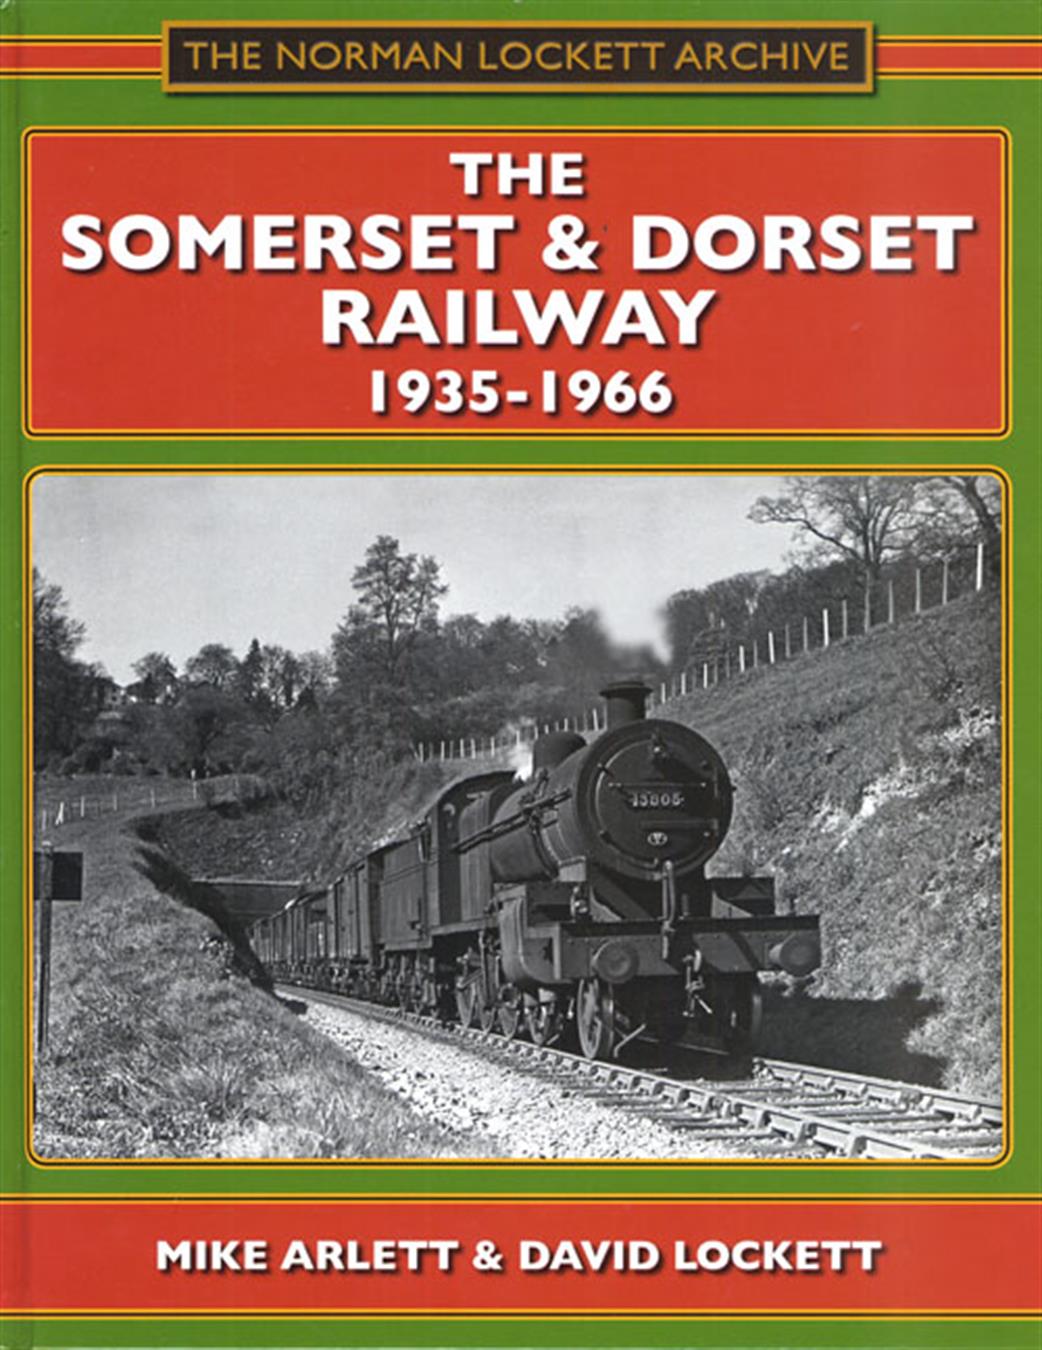 Lightmoor Press LockettS&D The Somerset & Dorset Railway 1935-1966 Norman Lockett Archive